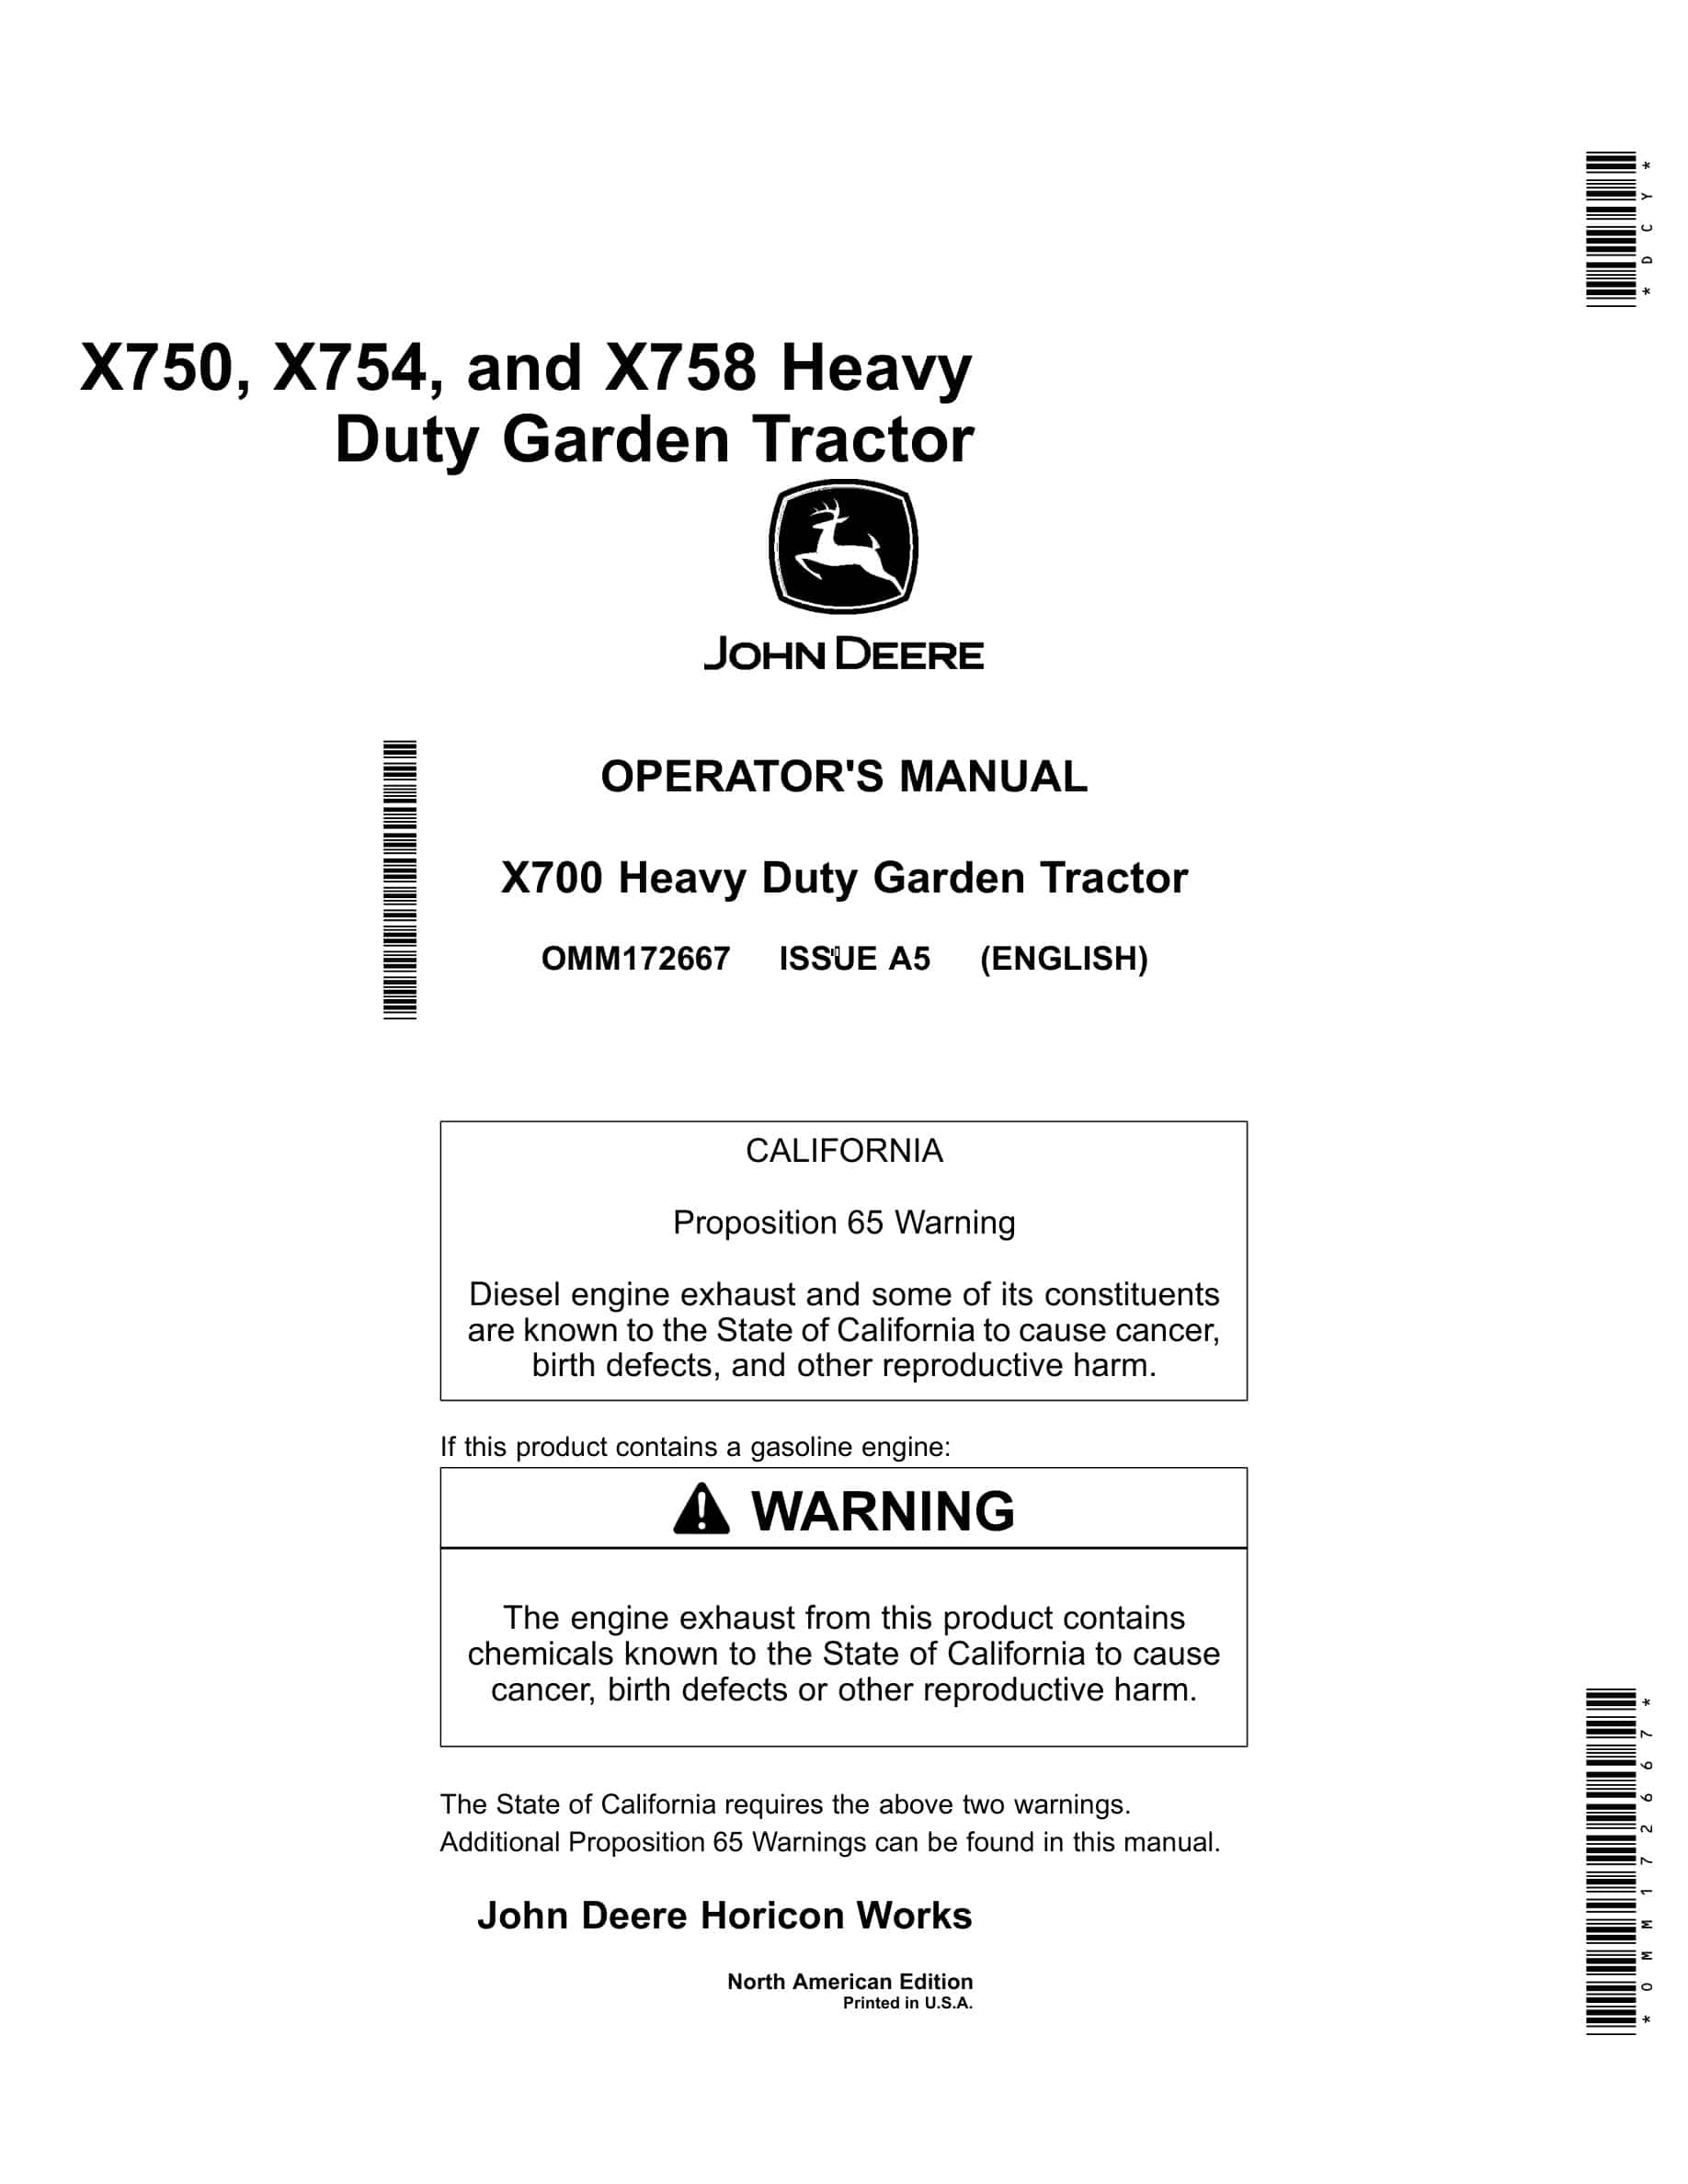 John Deere X700 Tractor Operator Manual OMM172667-1